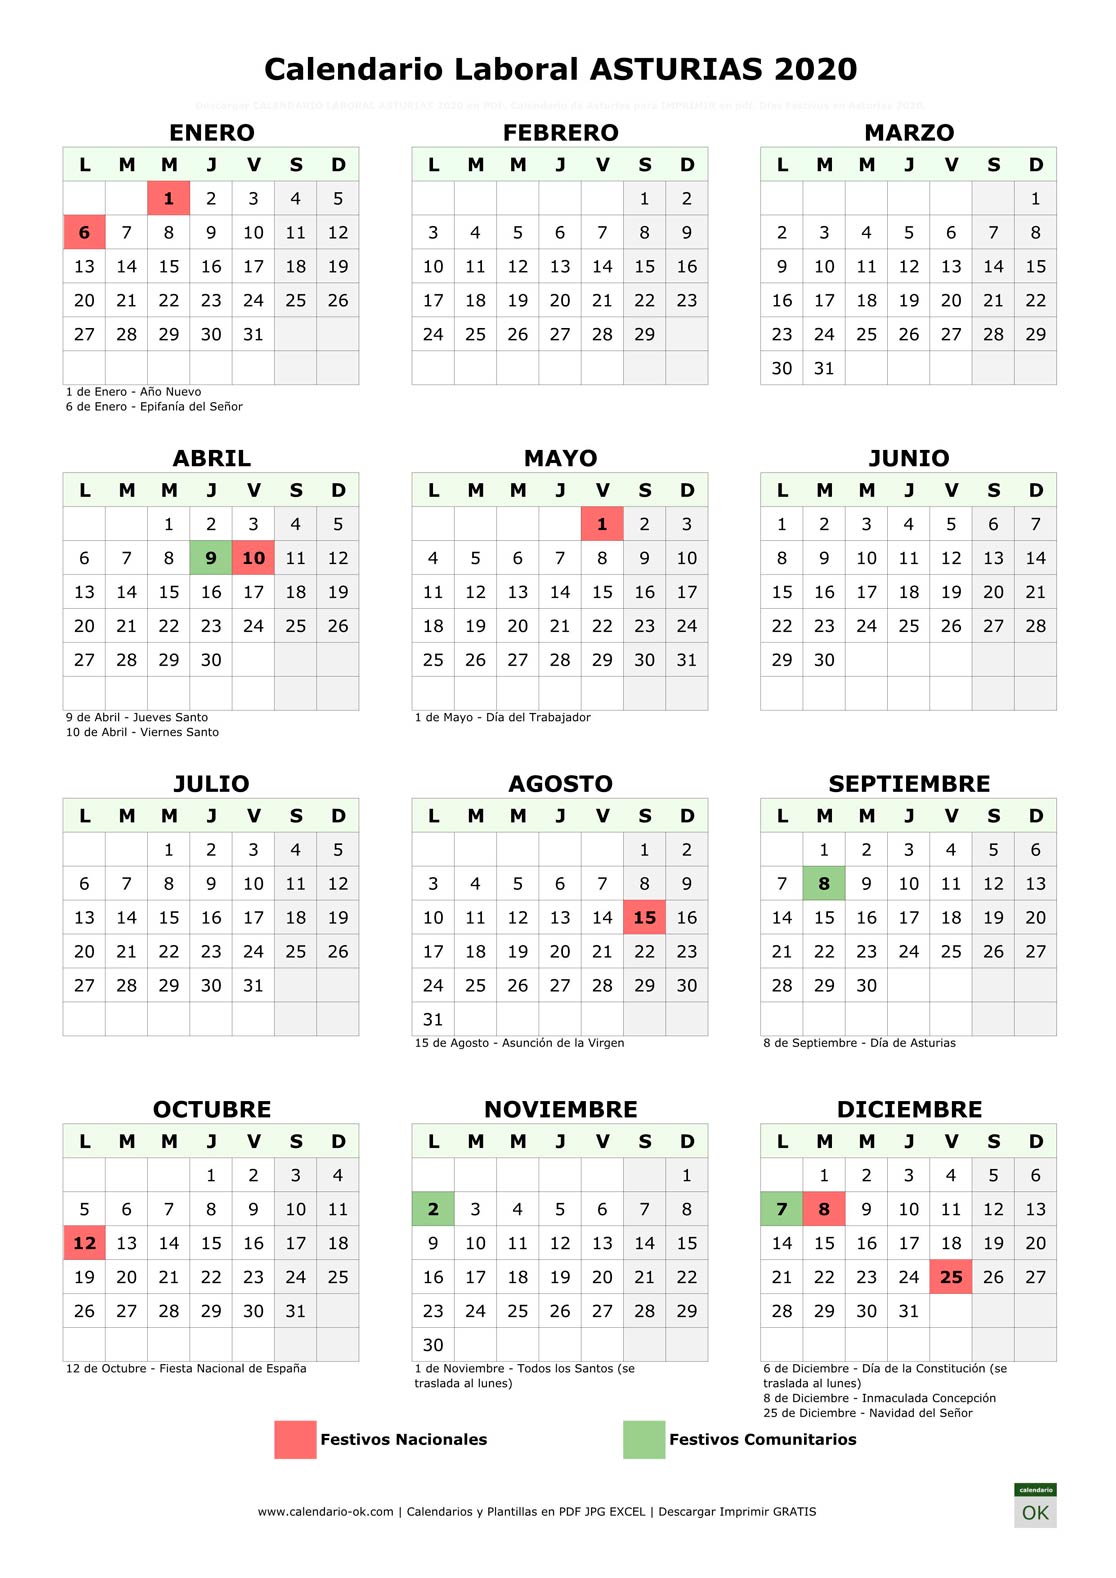 Calendario Laboral ASTURIAS 2020